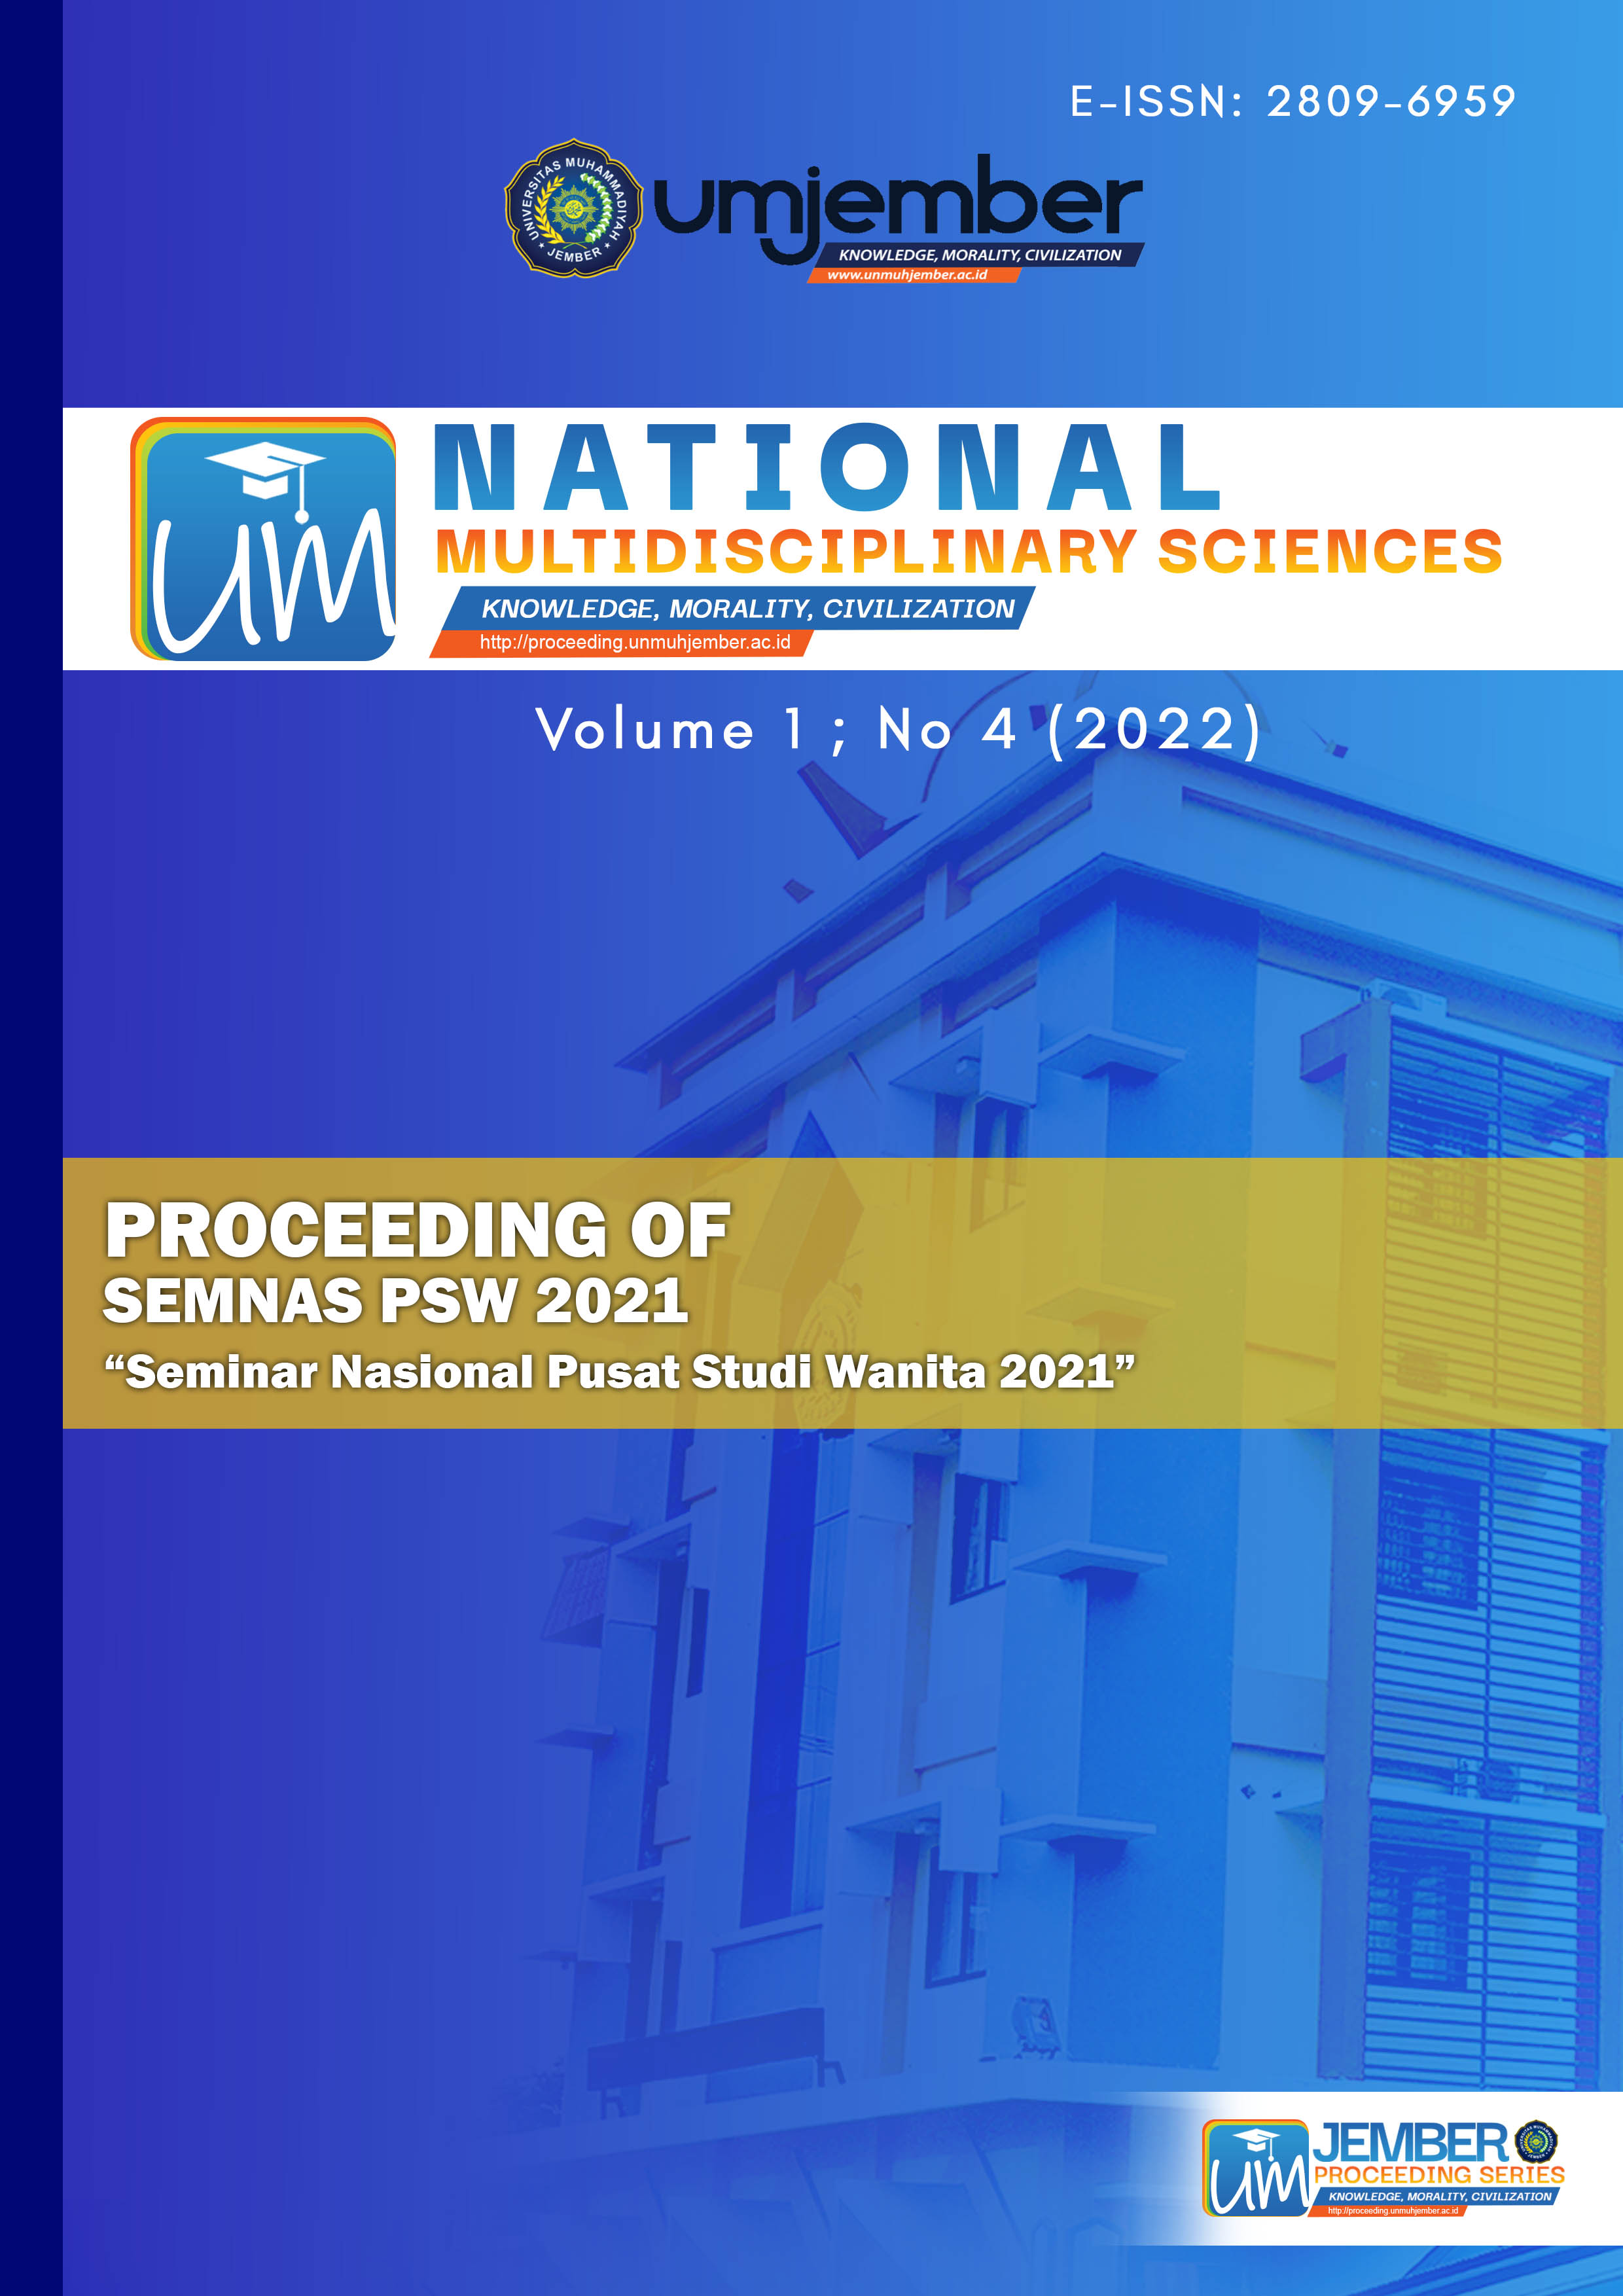 					View Vol. 1 No. 4 (2022): Proceedings SEMNAS PSW 2021
				